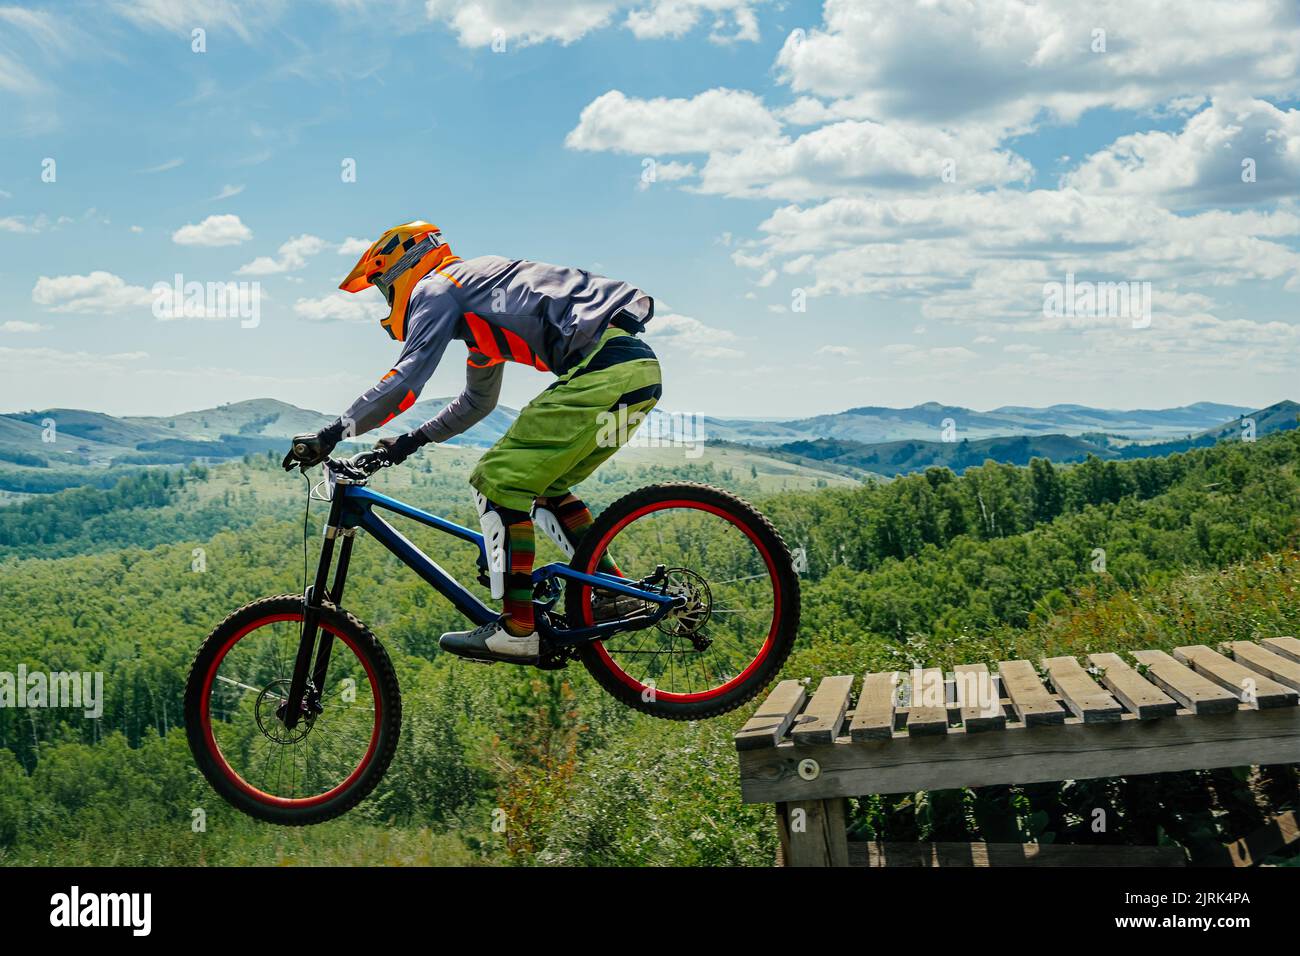 athlete rider drops downhill jump Stock Photo